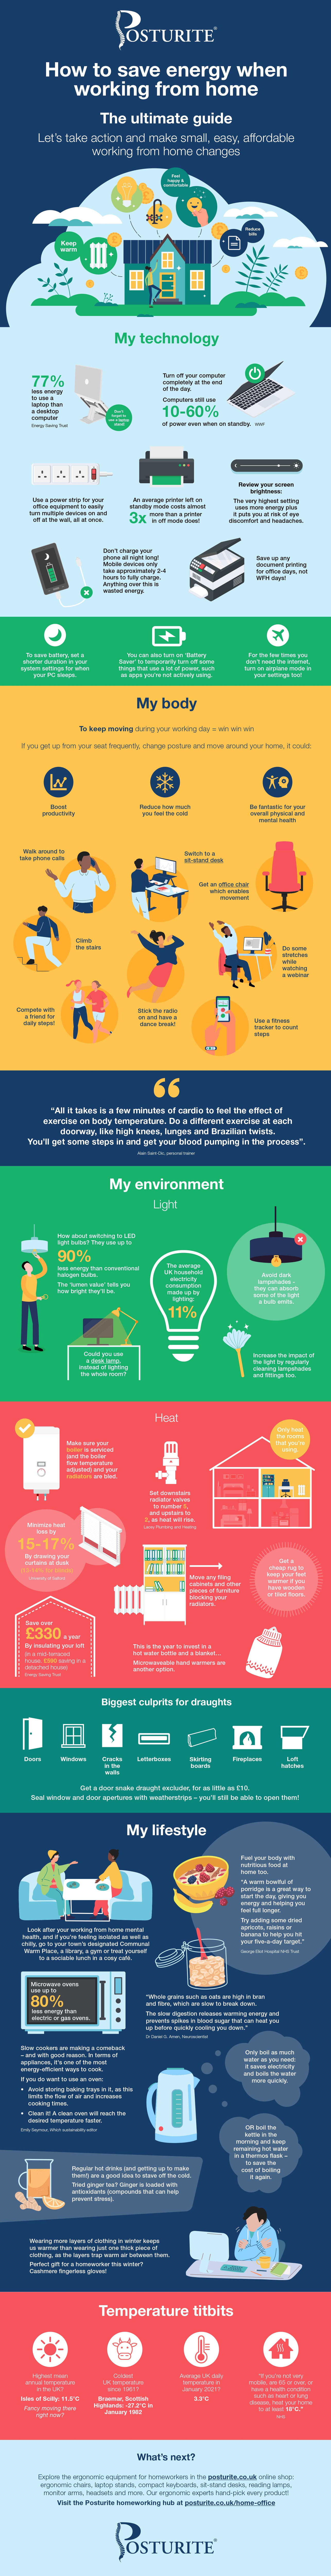 Home working energy saving infographic